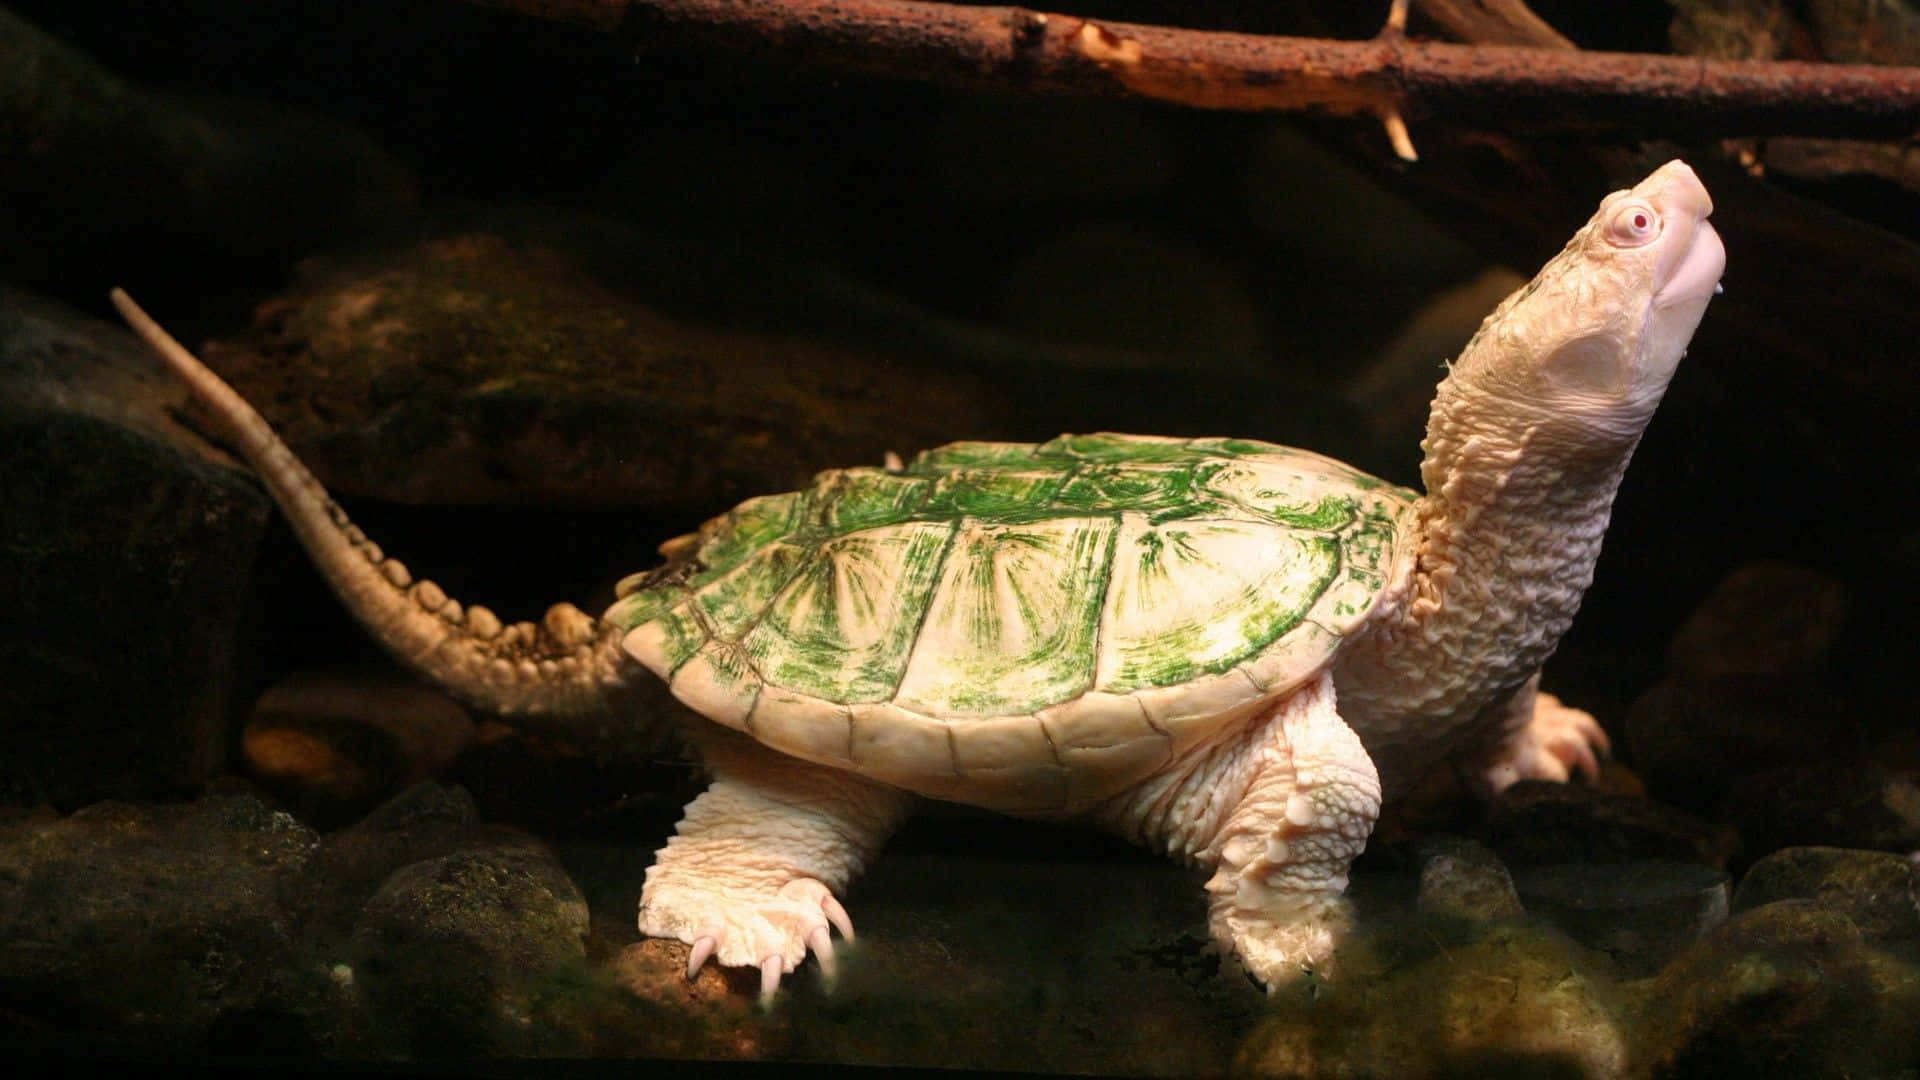 a white turtle is walking in an aquarium